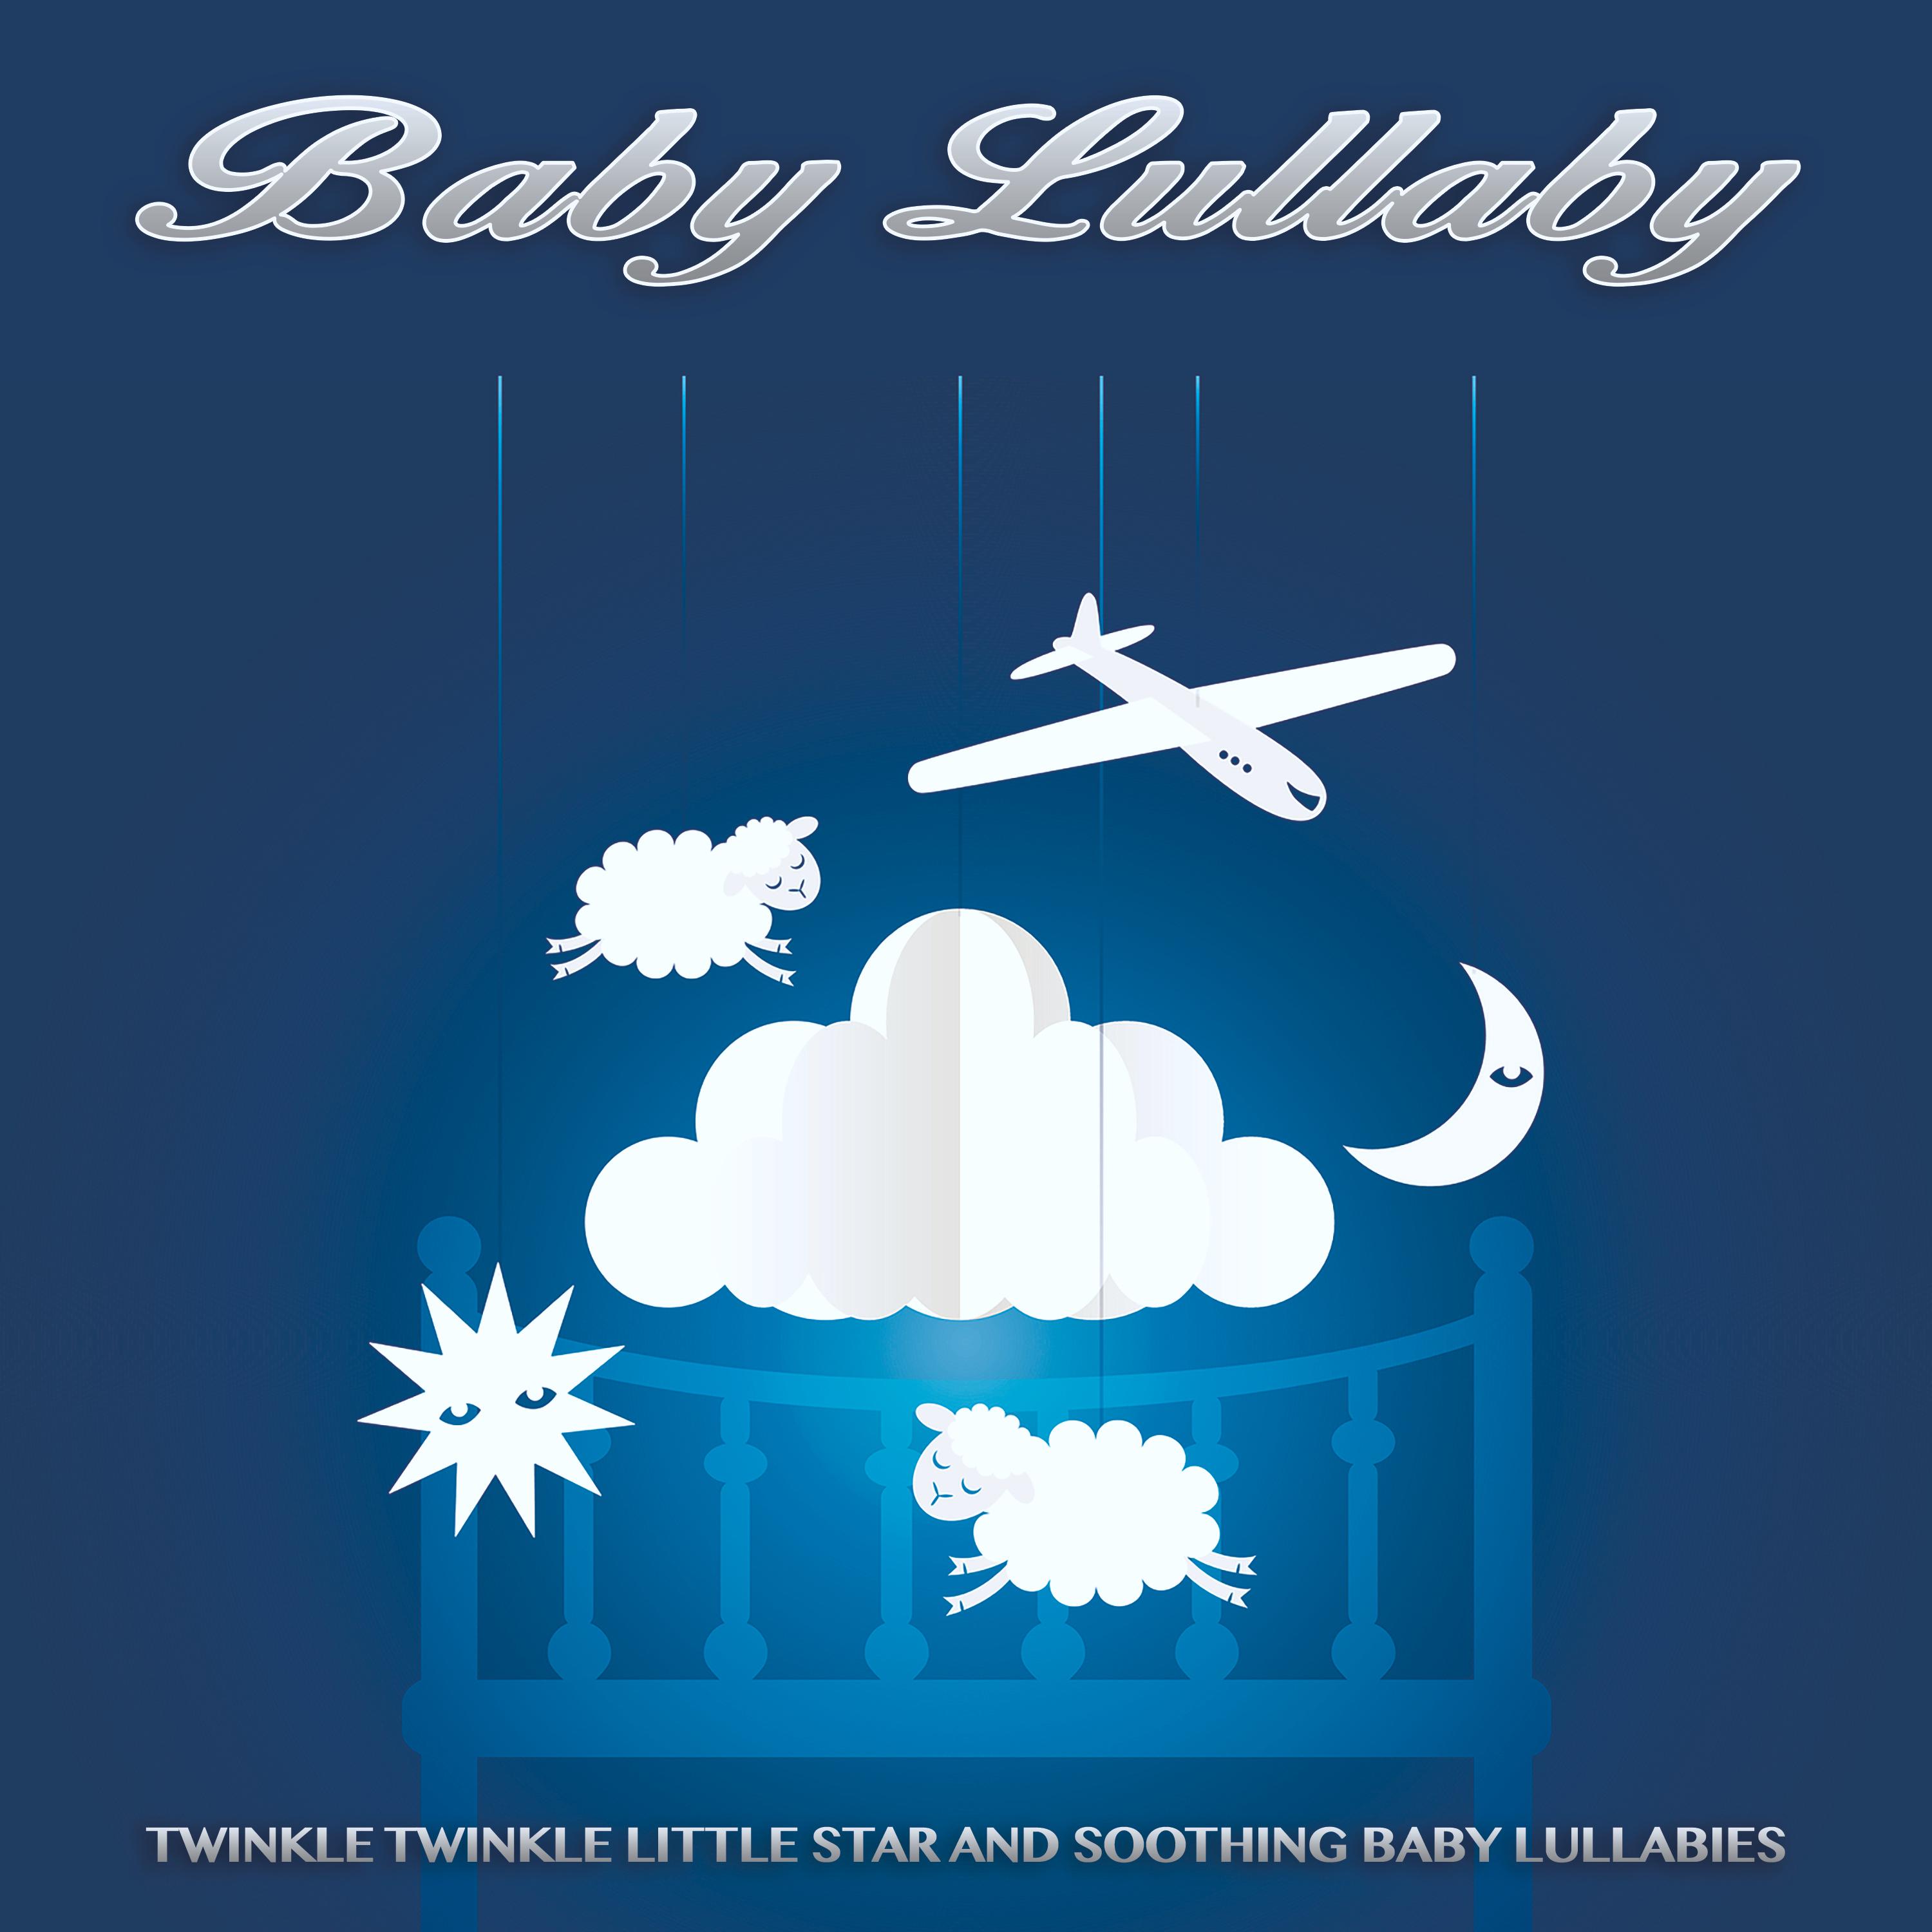 London Bridge Is Falling Down - Baby Lullaby - Baby Sleep Music - Baby Lullabies